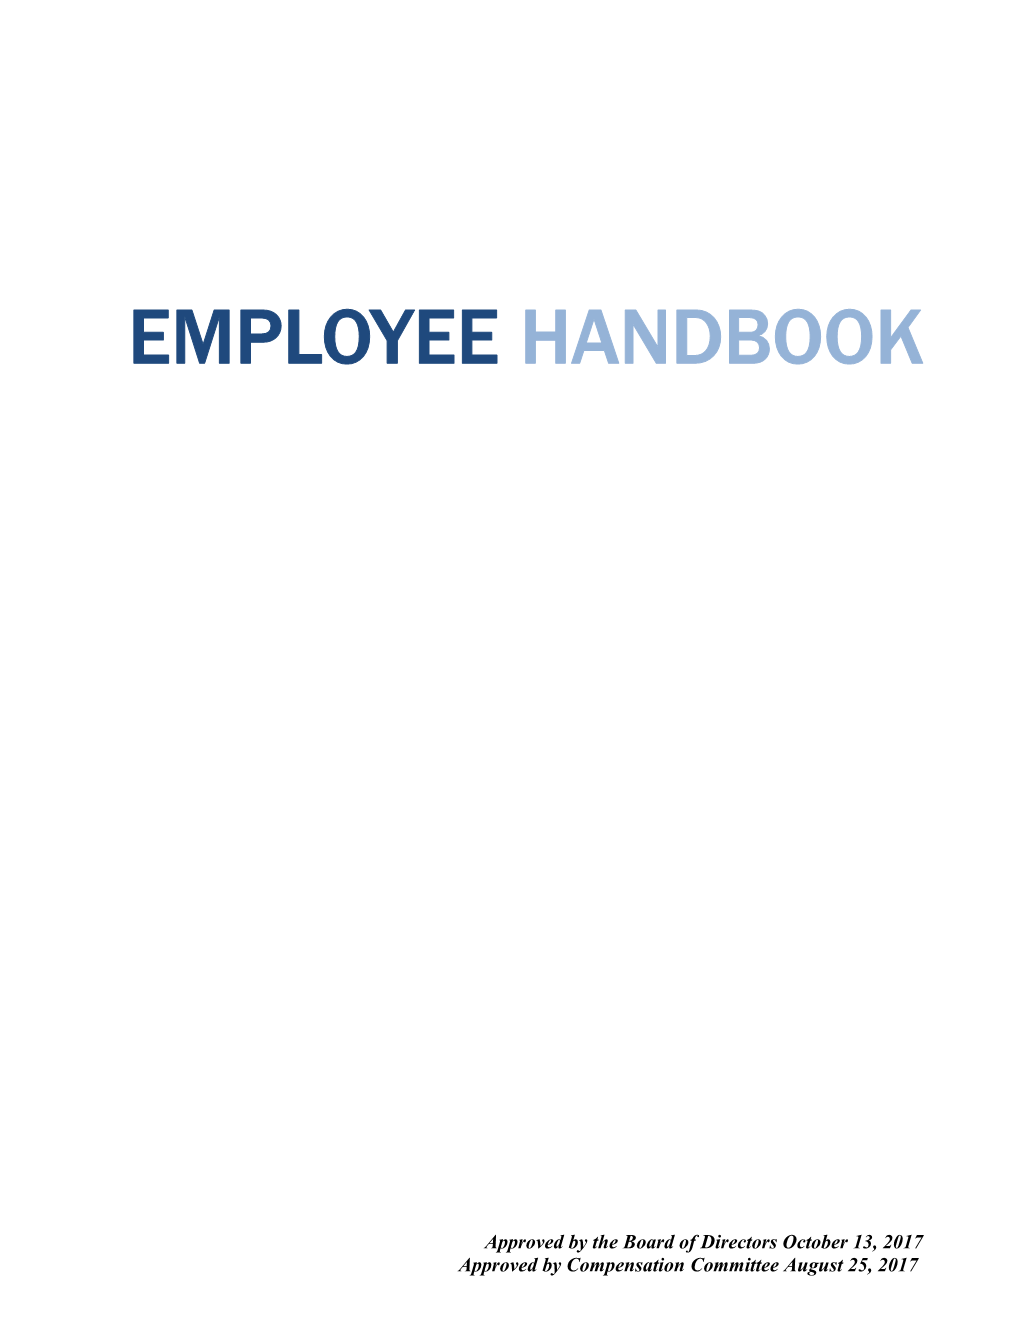 Employee Handbook s3